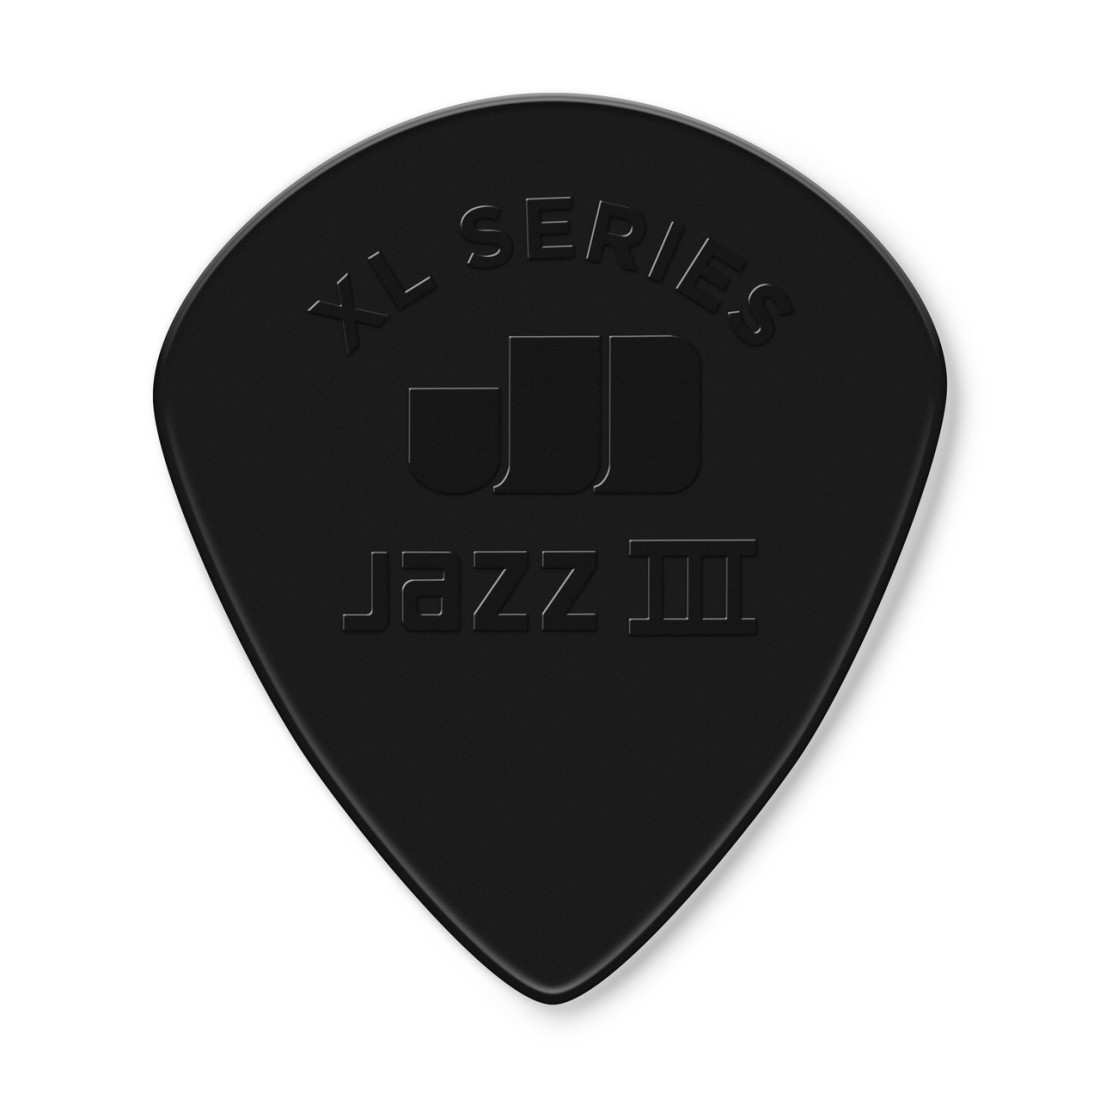 Jazz III XL Guitar Picks Players Pack (6 Pack) - 1.38mm, Black Nylon